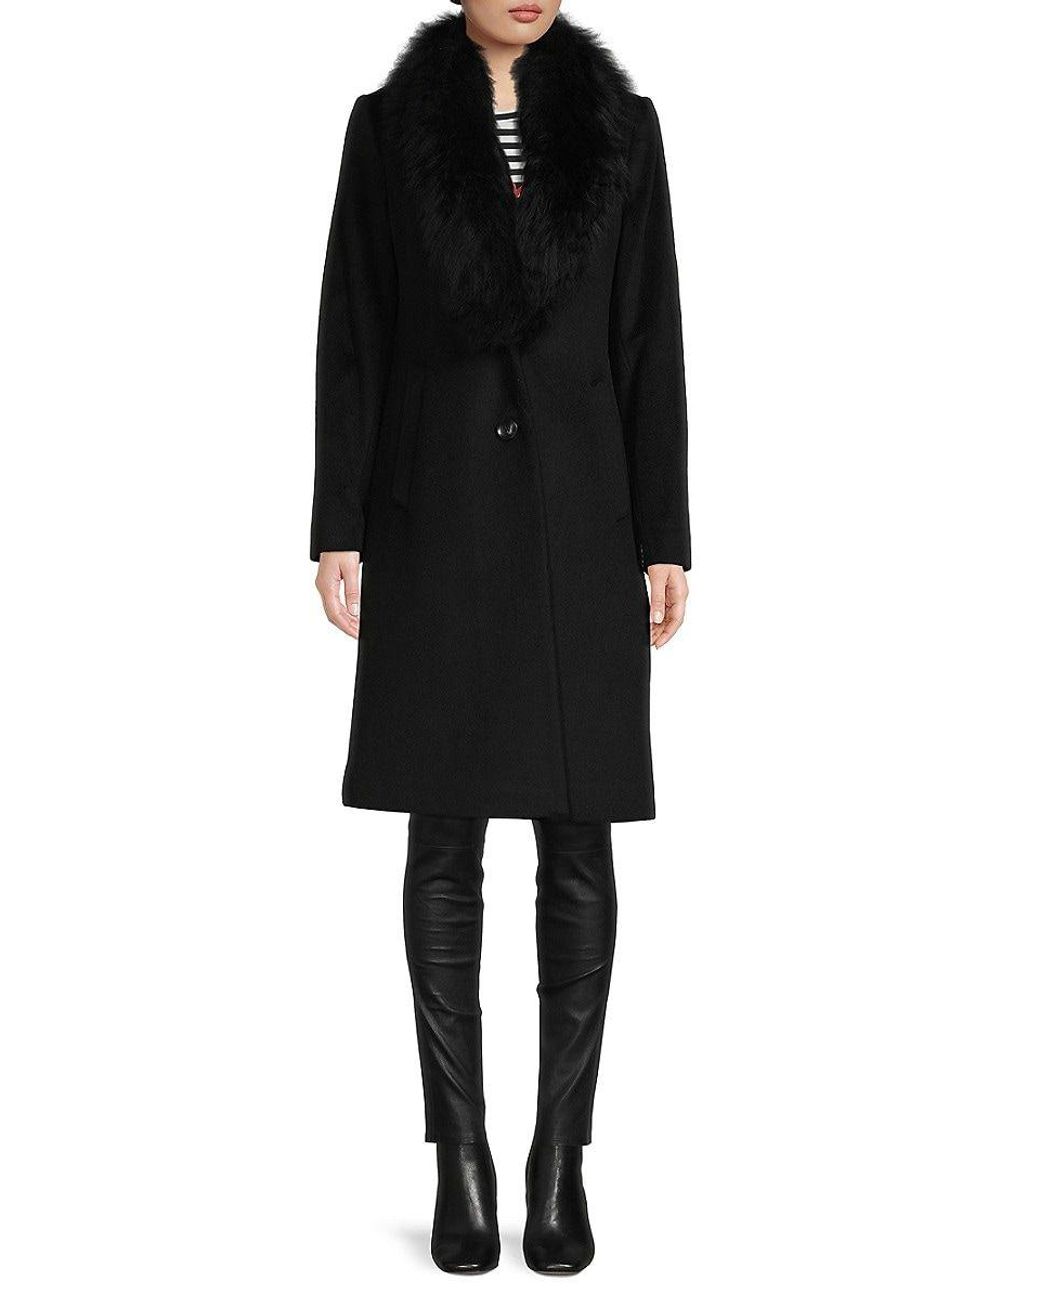 Sofia Cashmere Wool-blend Shearling Shawl Collar Coat in Black | Lyst